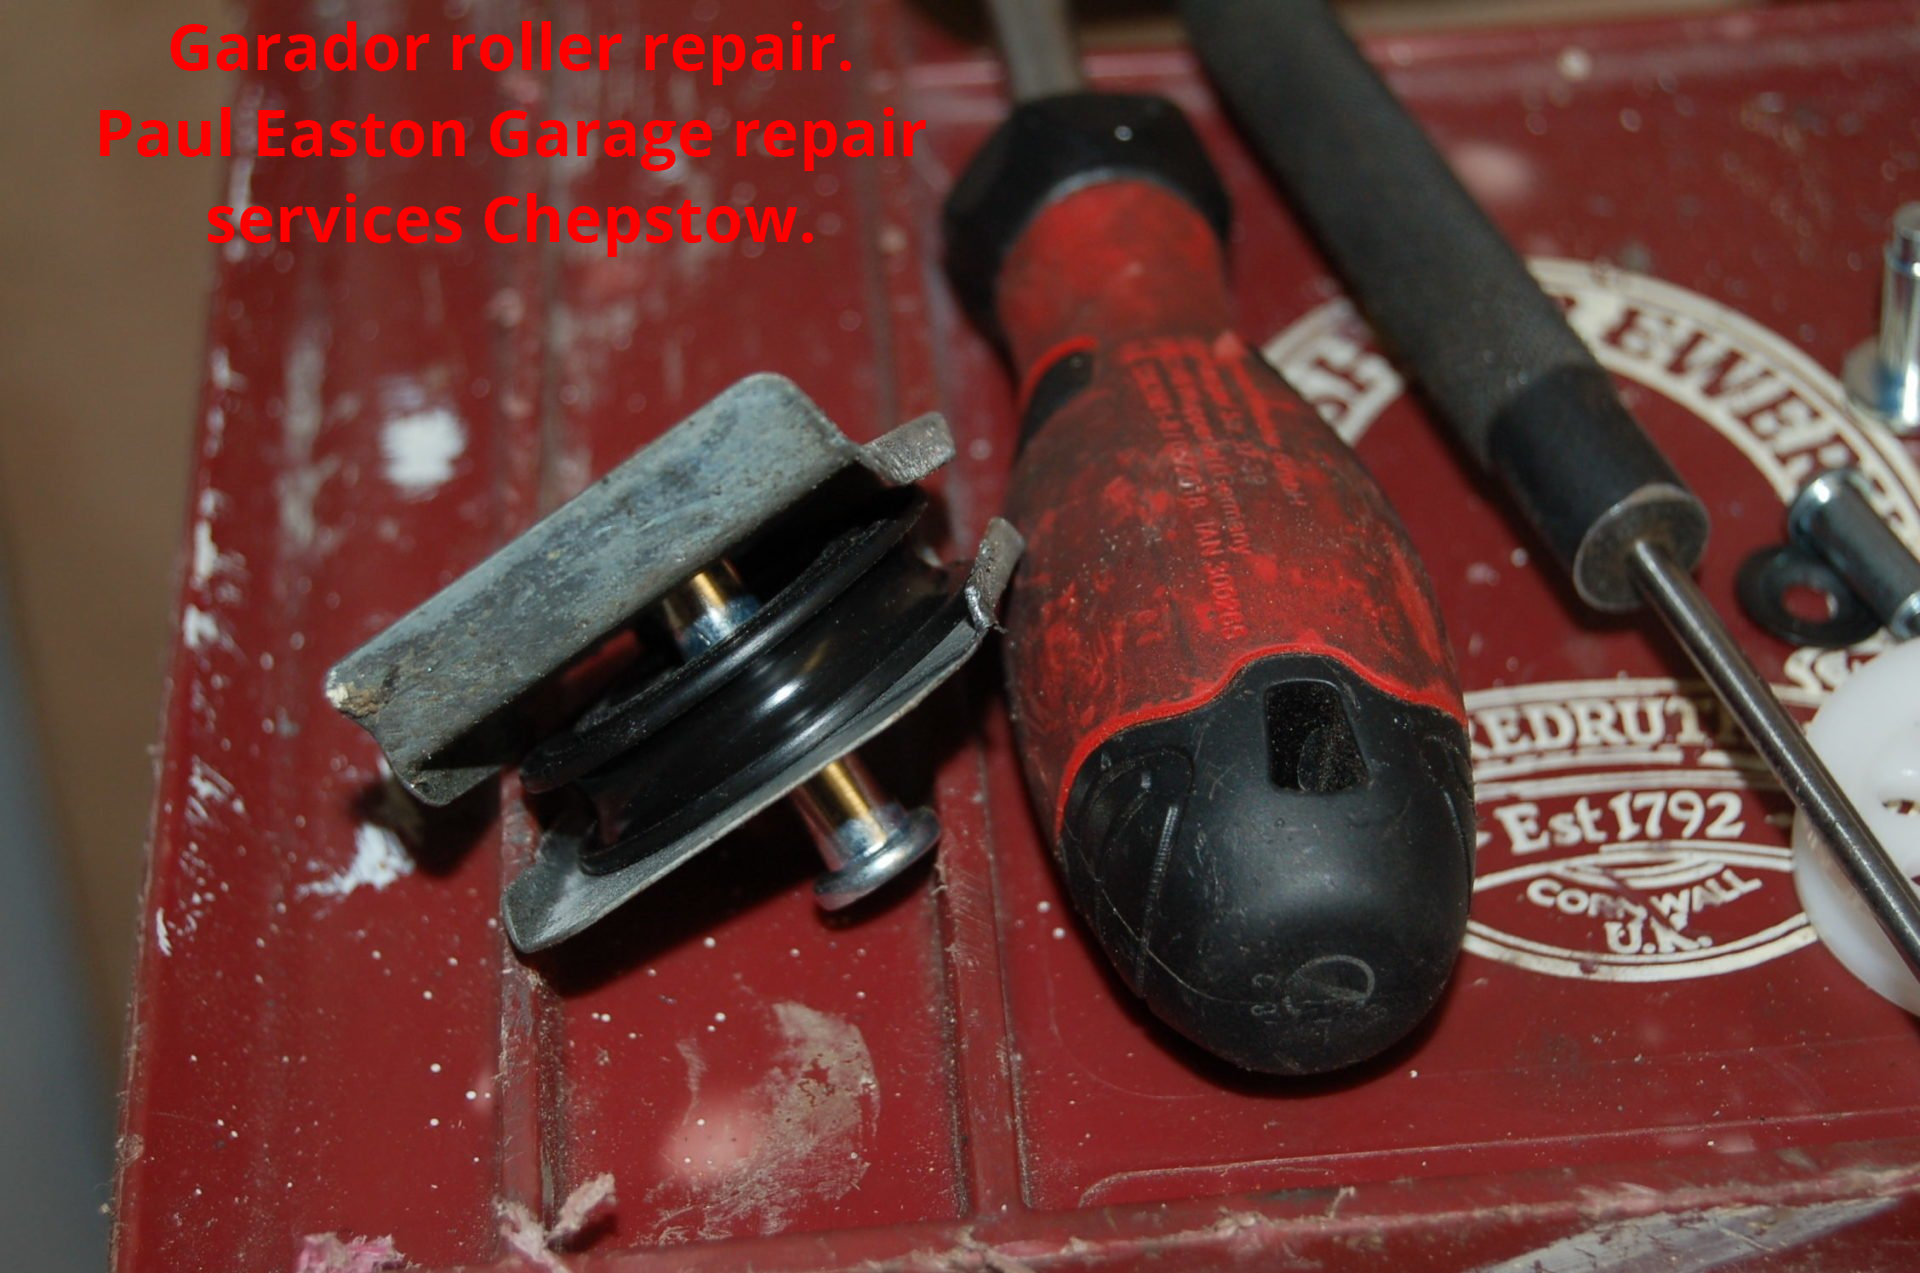 Garador roller repair Paul Easton Garage repair services Chepstow